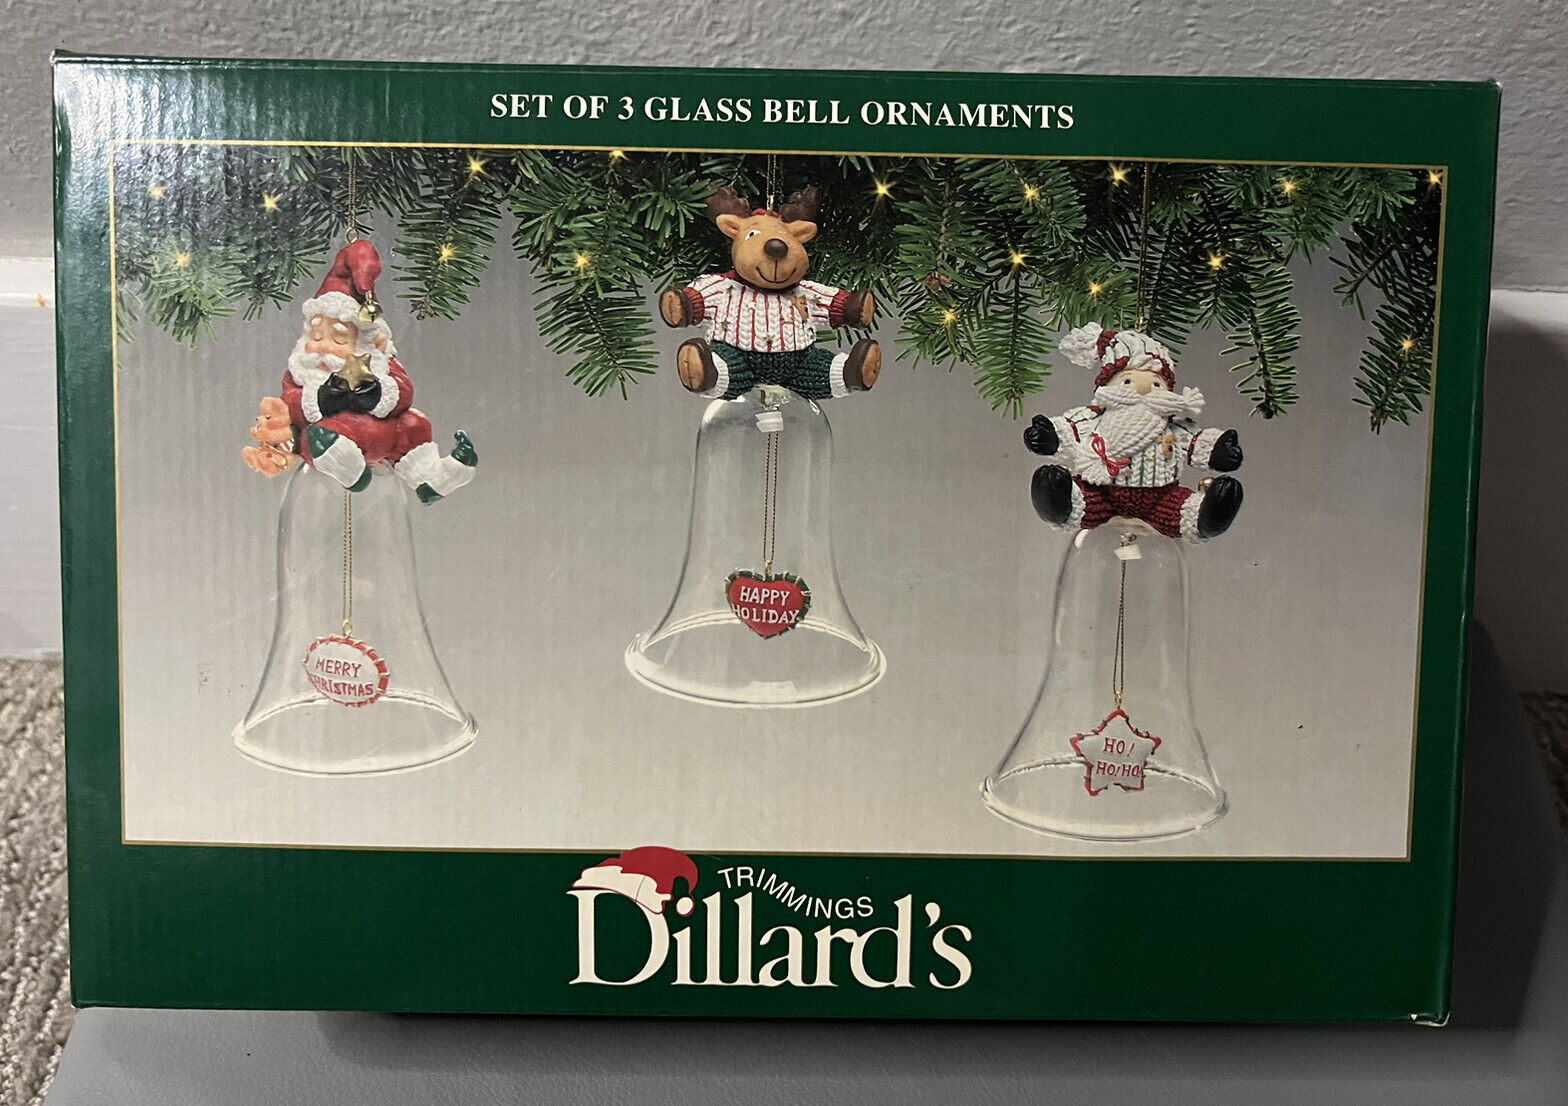 Vintage Dillard's Trimmings Set of 3 Glass Bell Ornaments New In Original Box